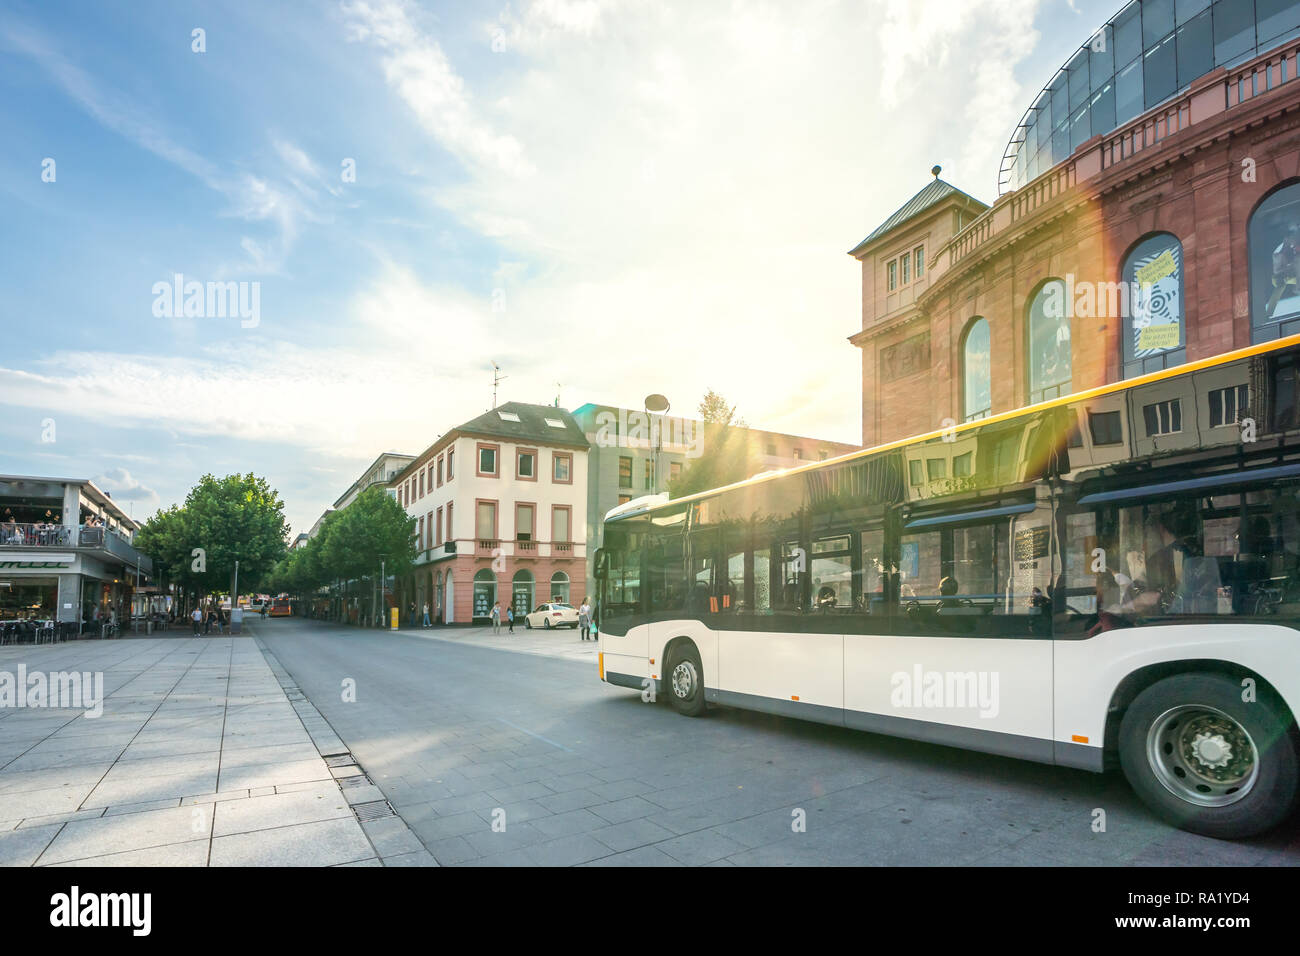 Bus, Public Transportation, Mainz, Germany Stock Photo